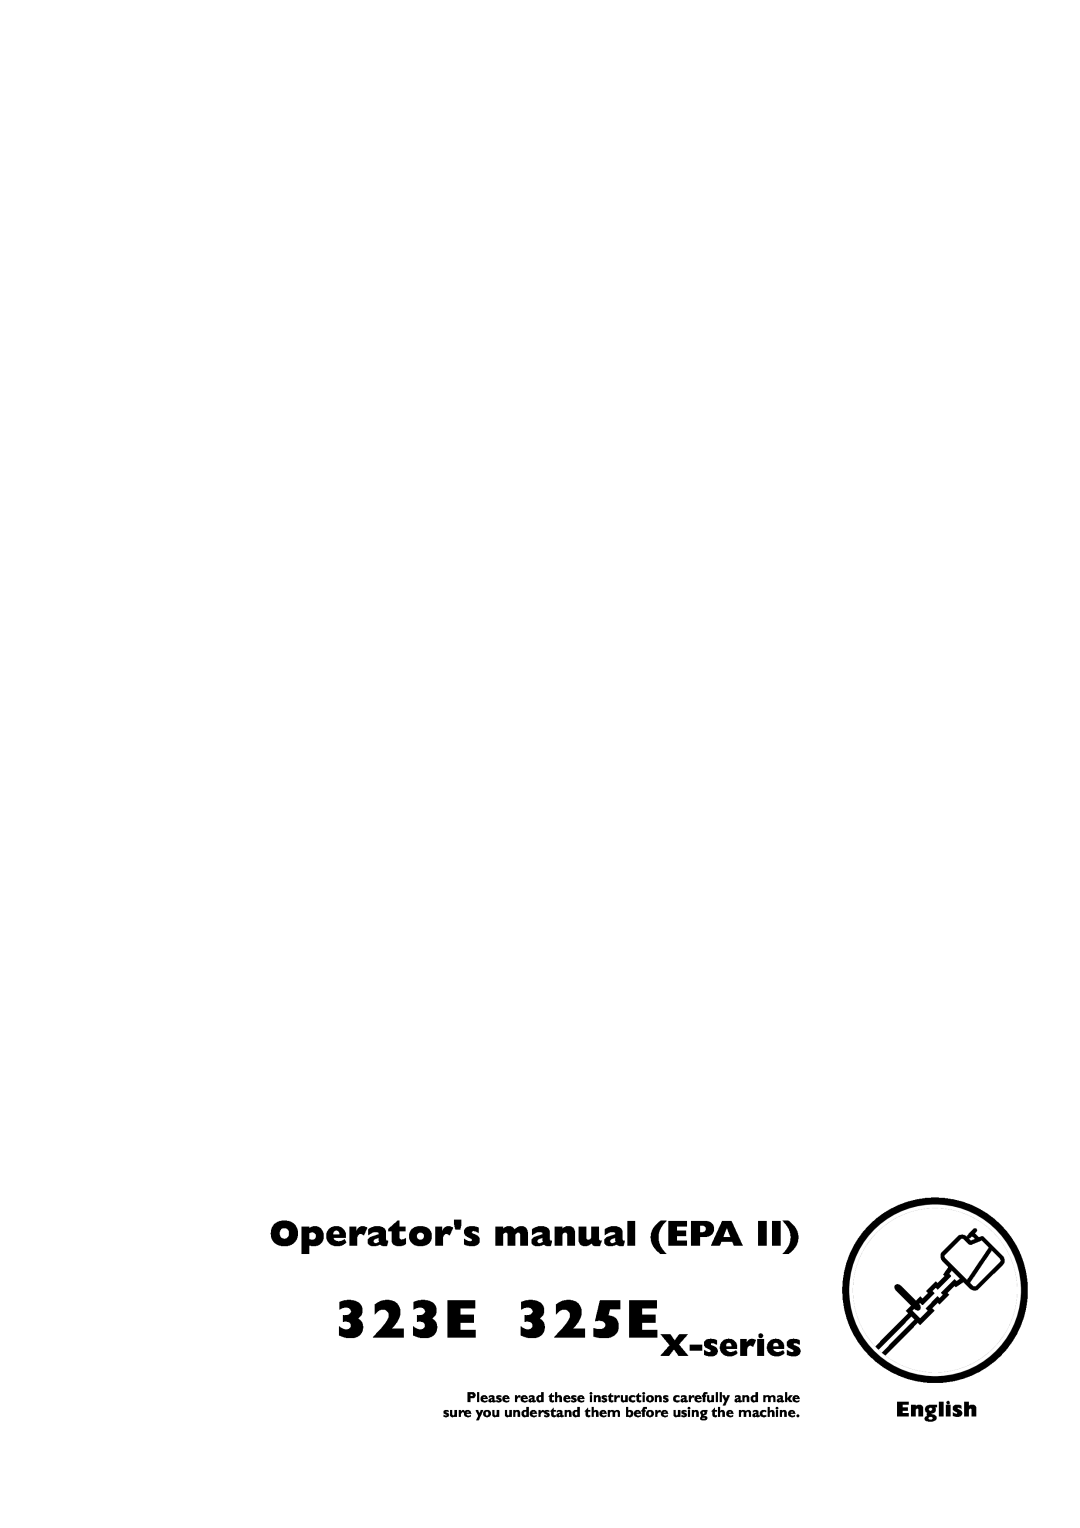 Husqvarna 323E, 325E manual 323E 325EX-series, Operators manual EPA, English 